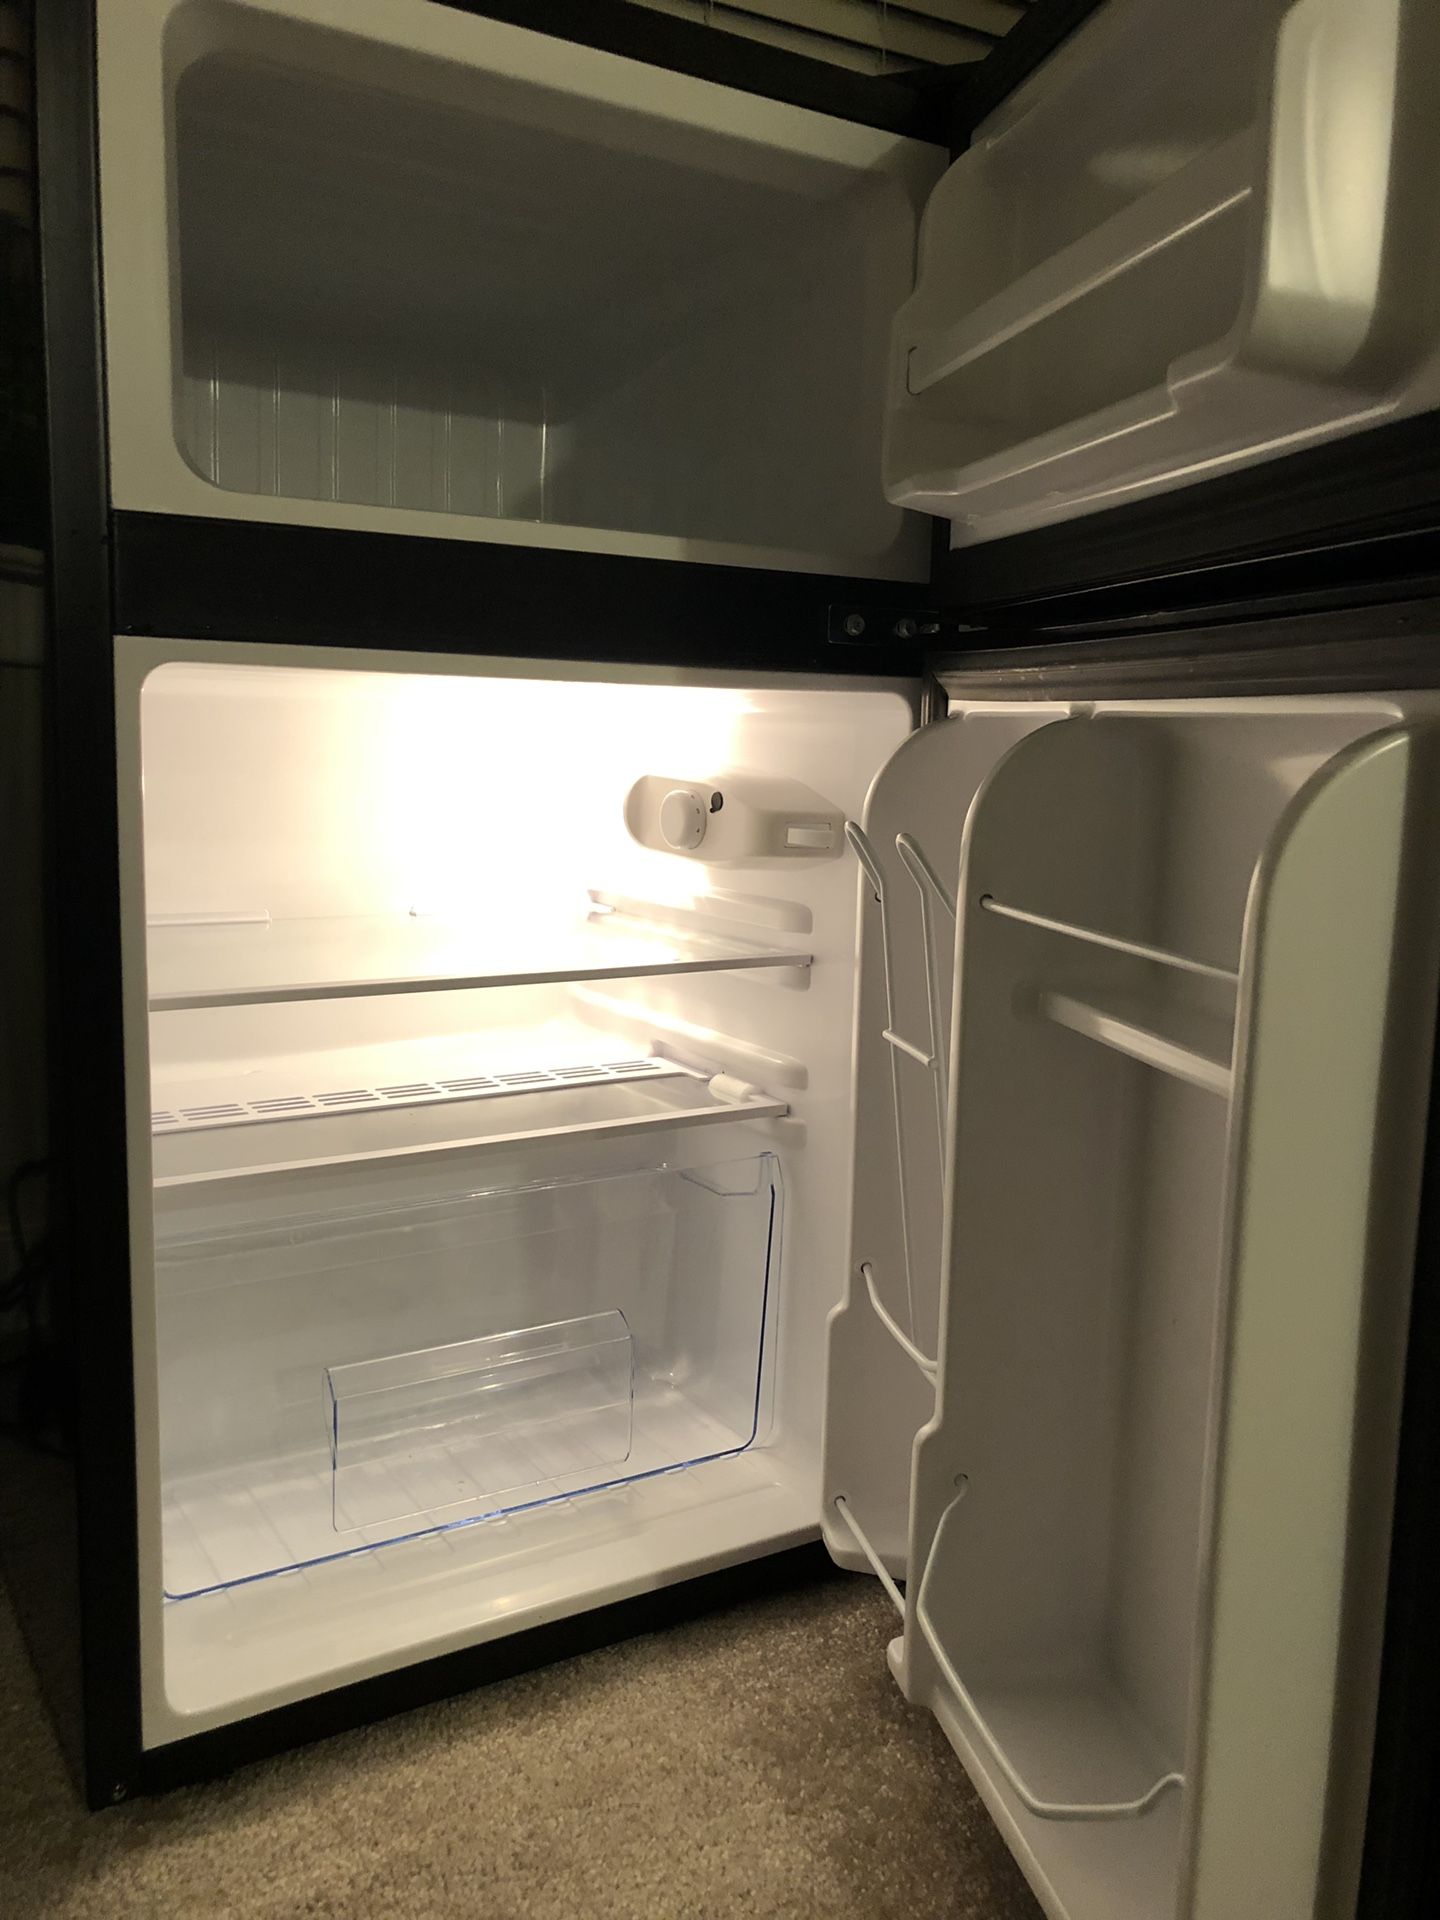 Haier mini refrigerator